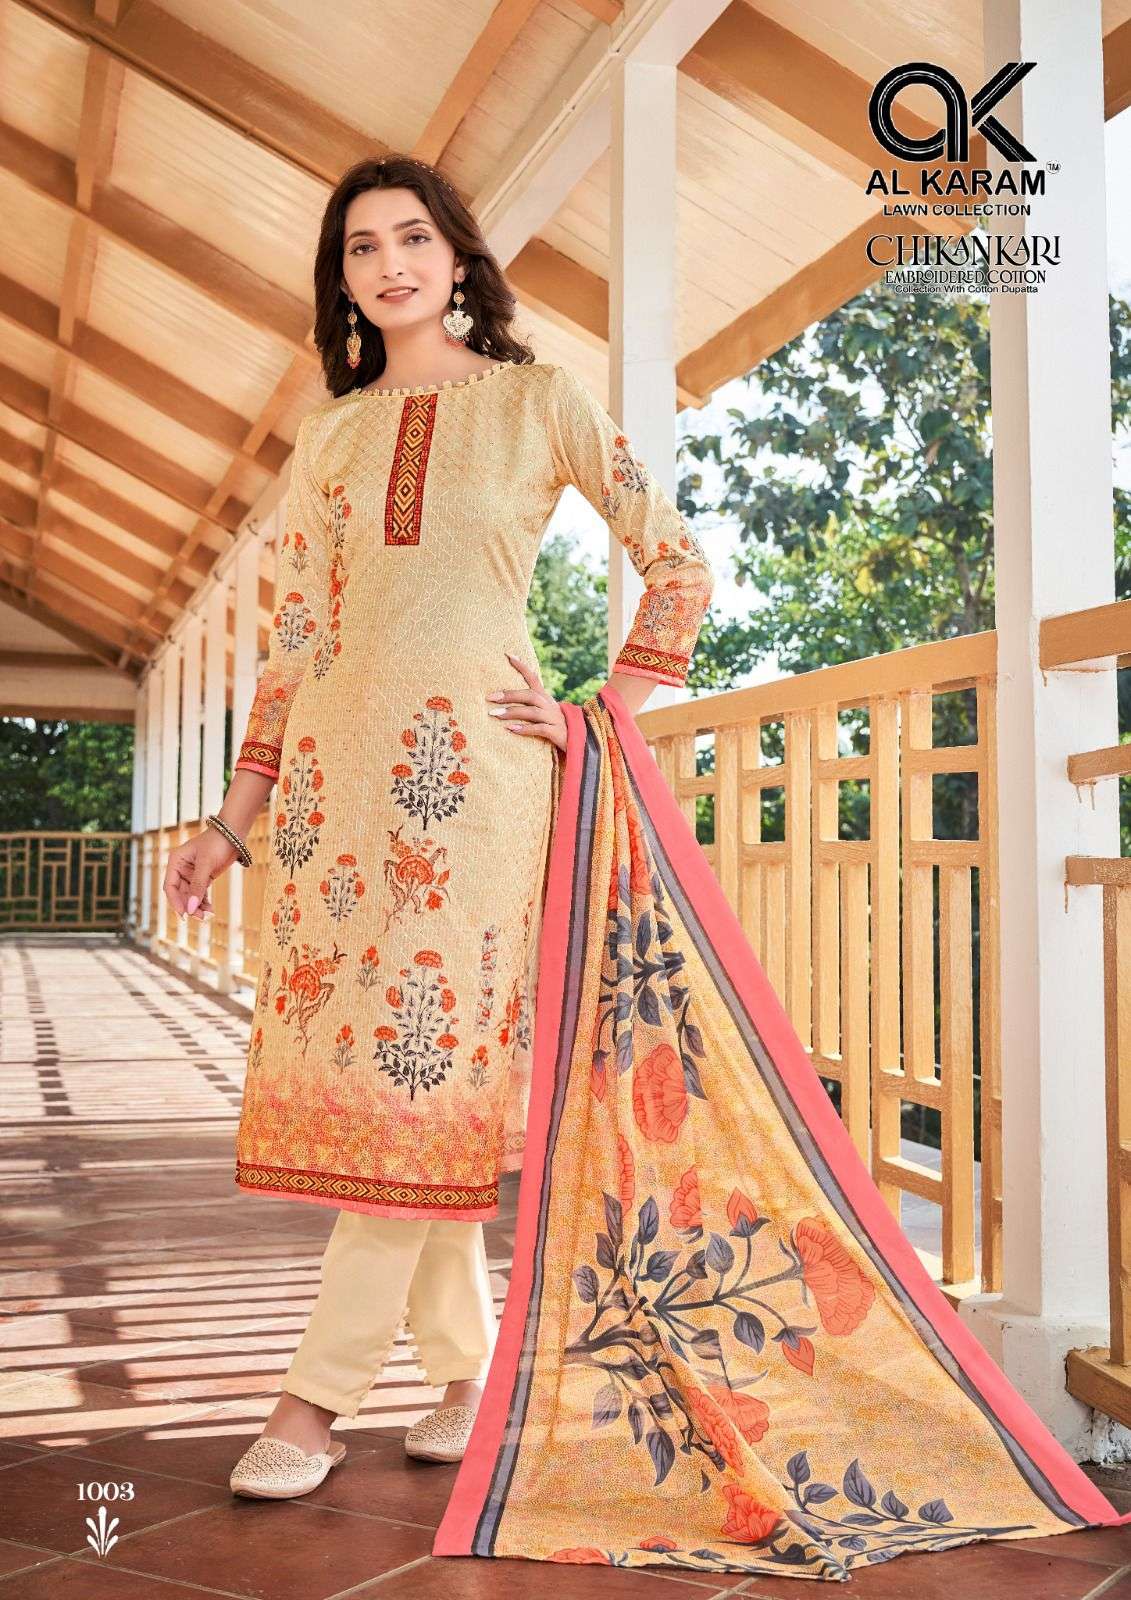 al karam chikankari 1001-1008 series stylish designer pakistani salwar kameez catalogue online wholesaler surat 